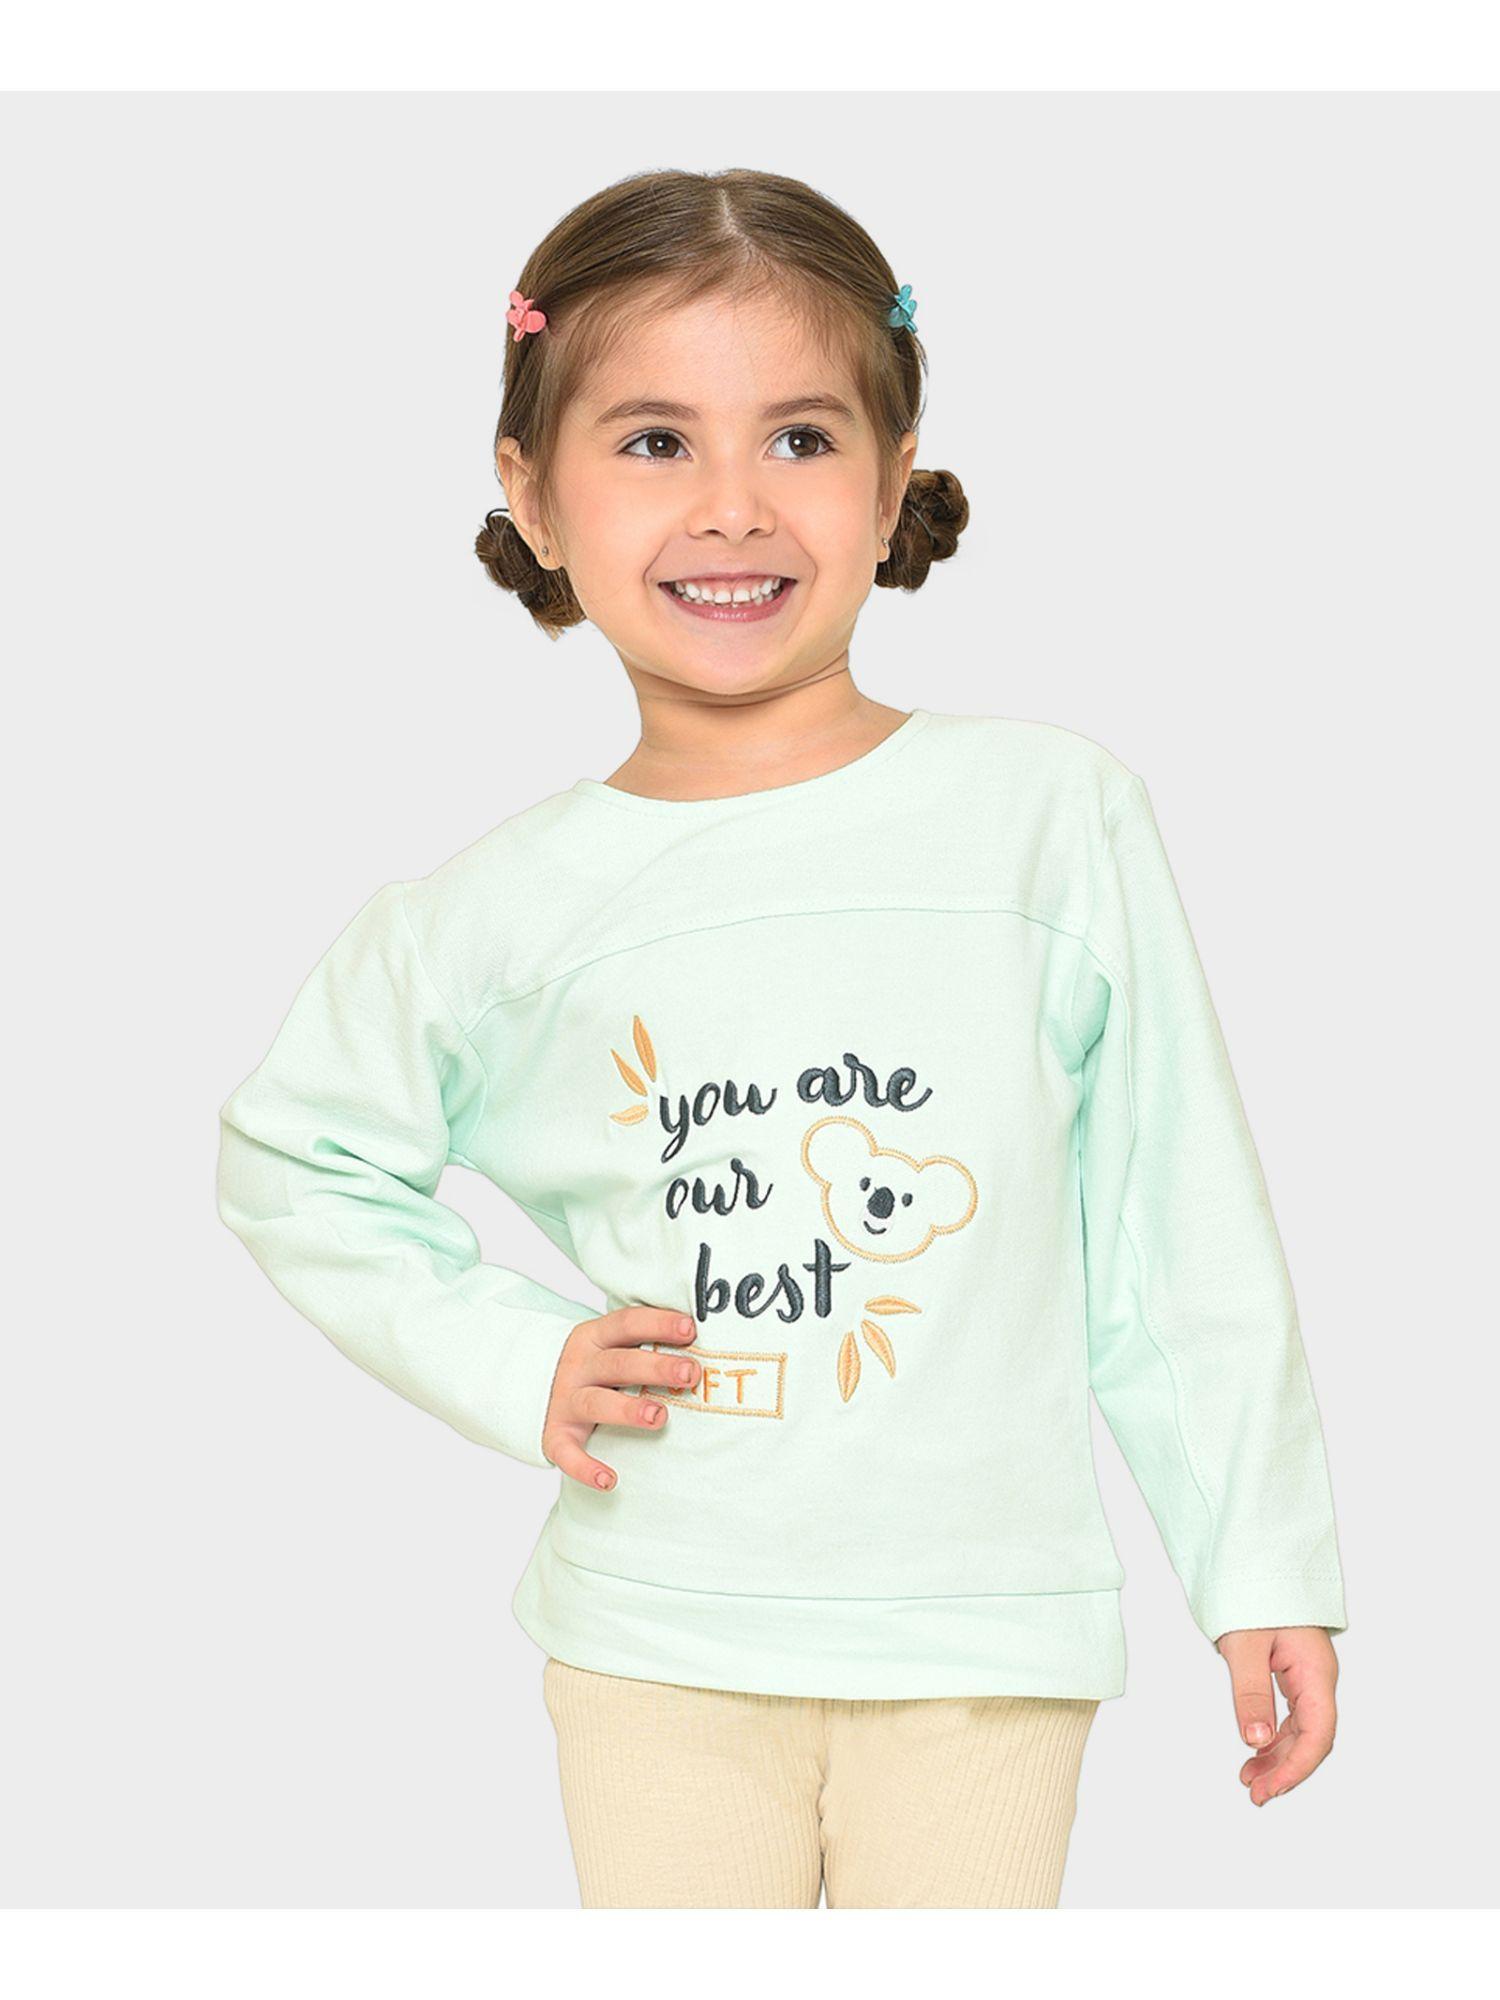 kids typography embroidered cotton pullover sweatshirt